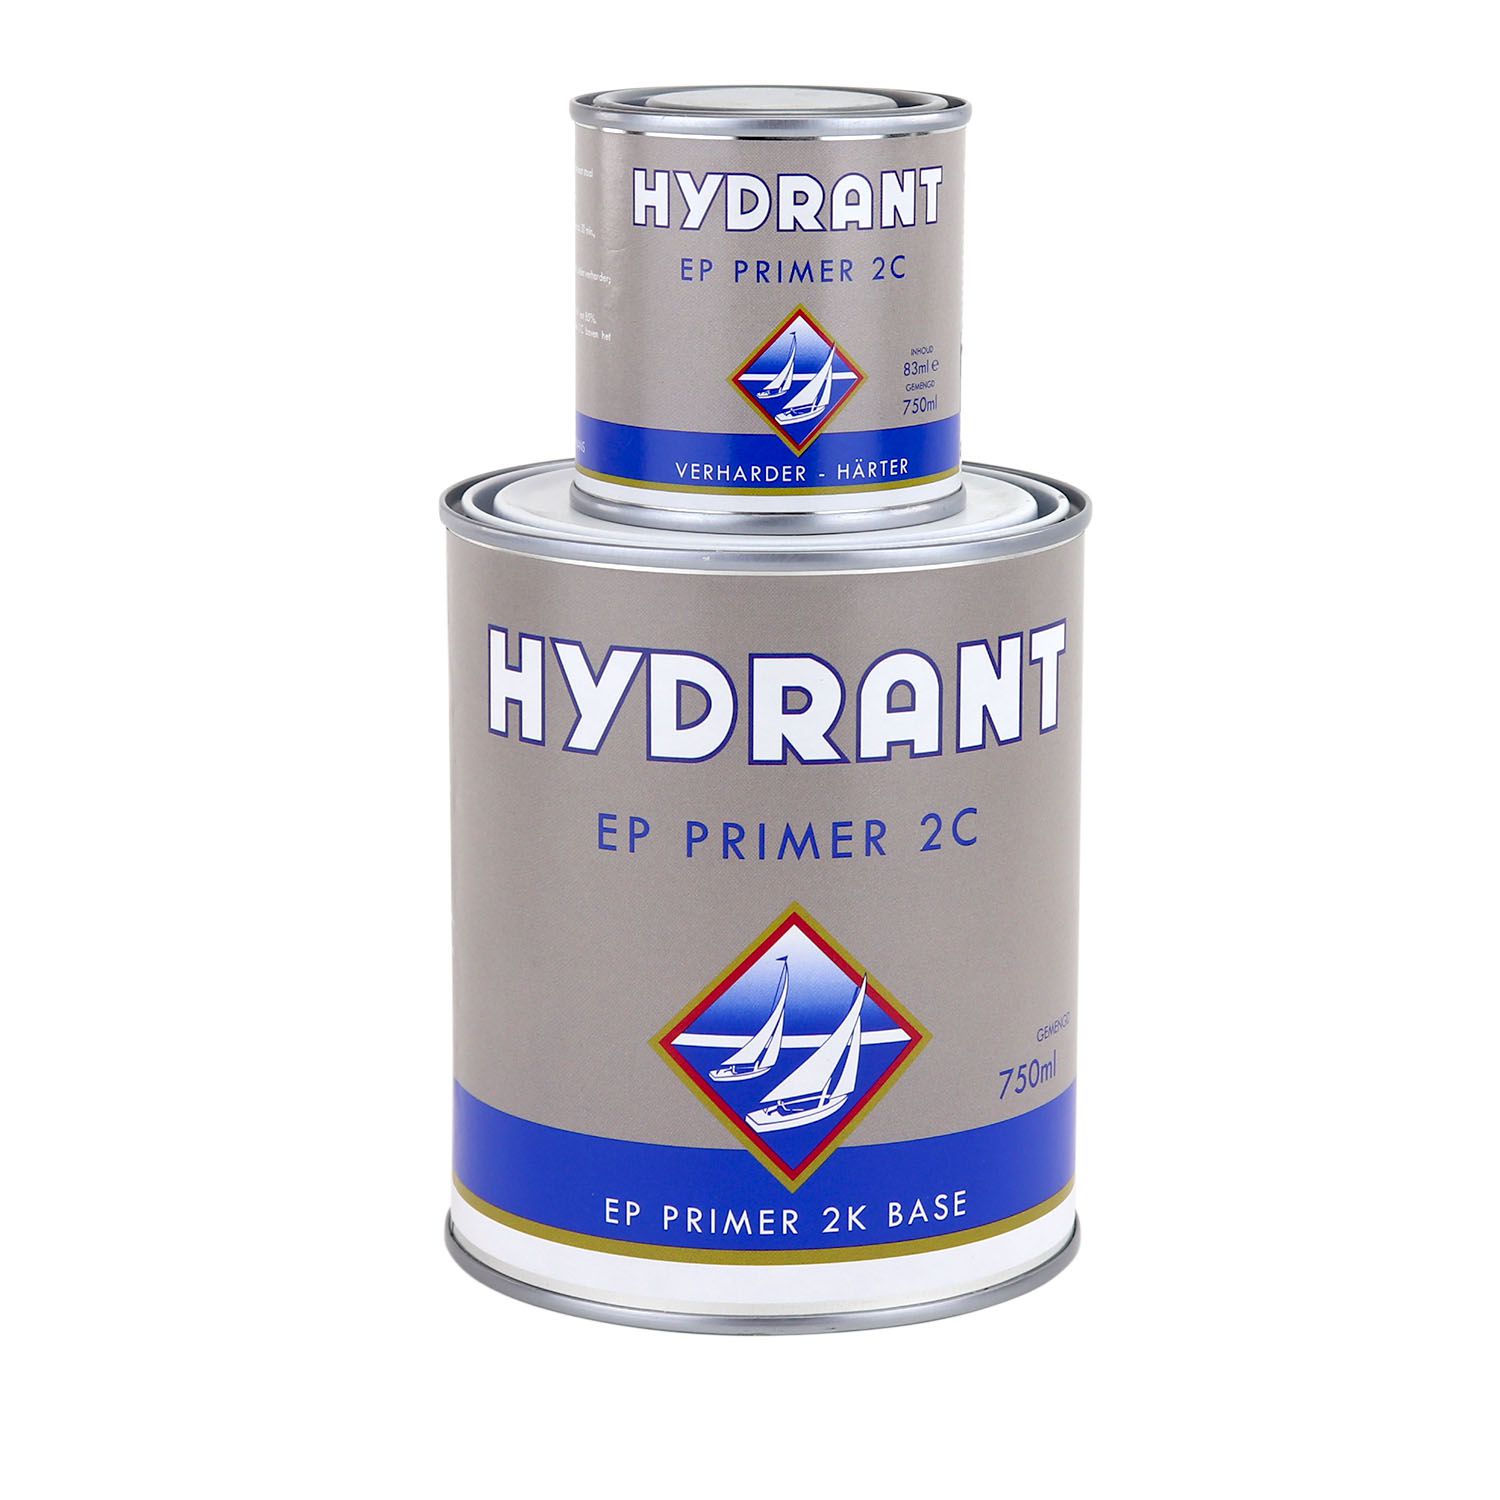 Hydrant Epoxy primer 2c